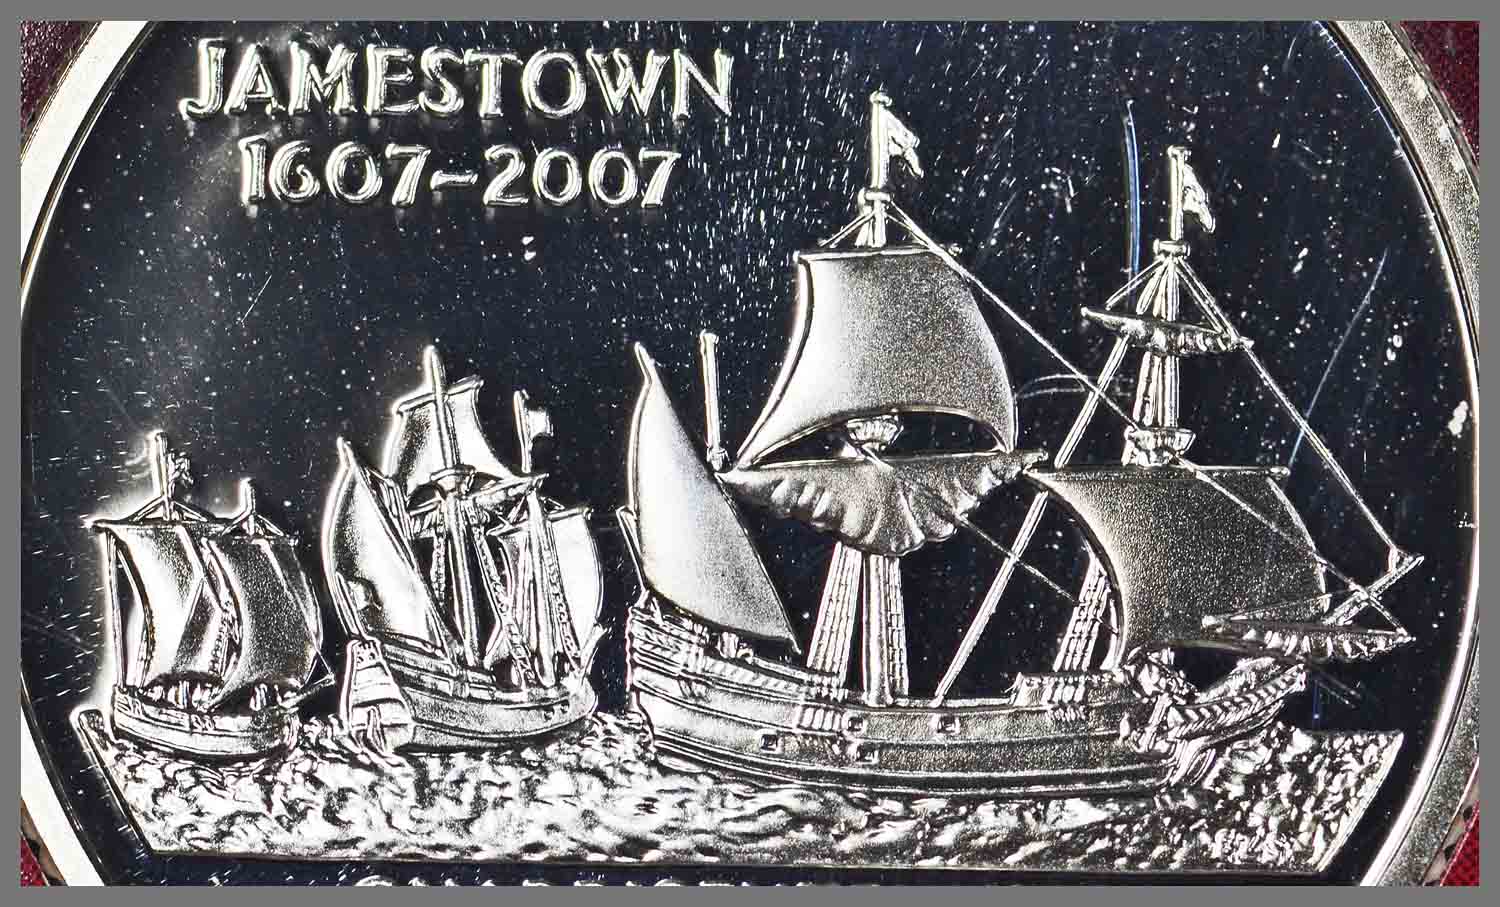 Founding of Jamestown